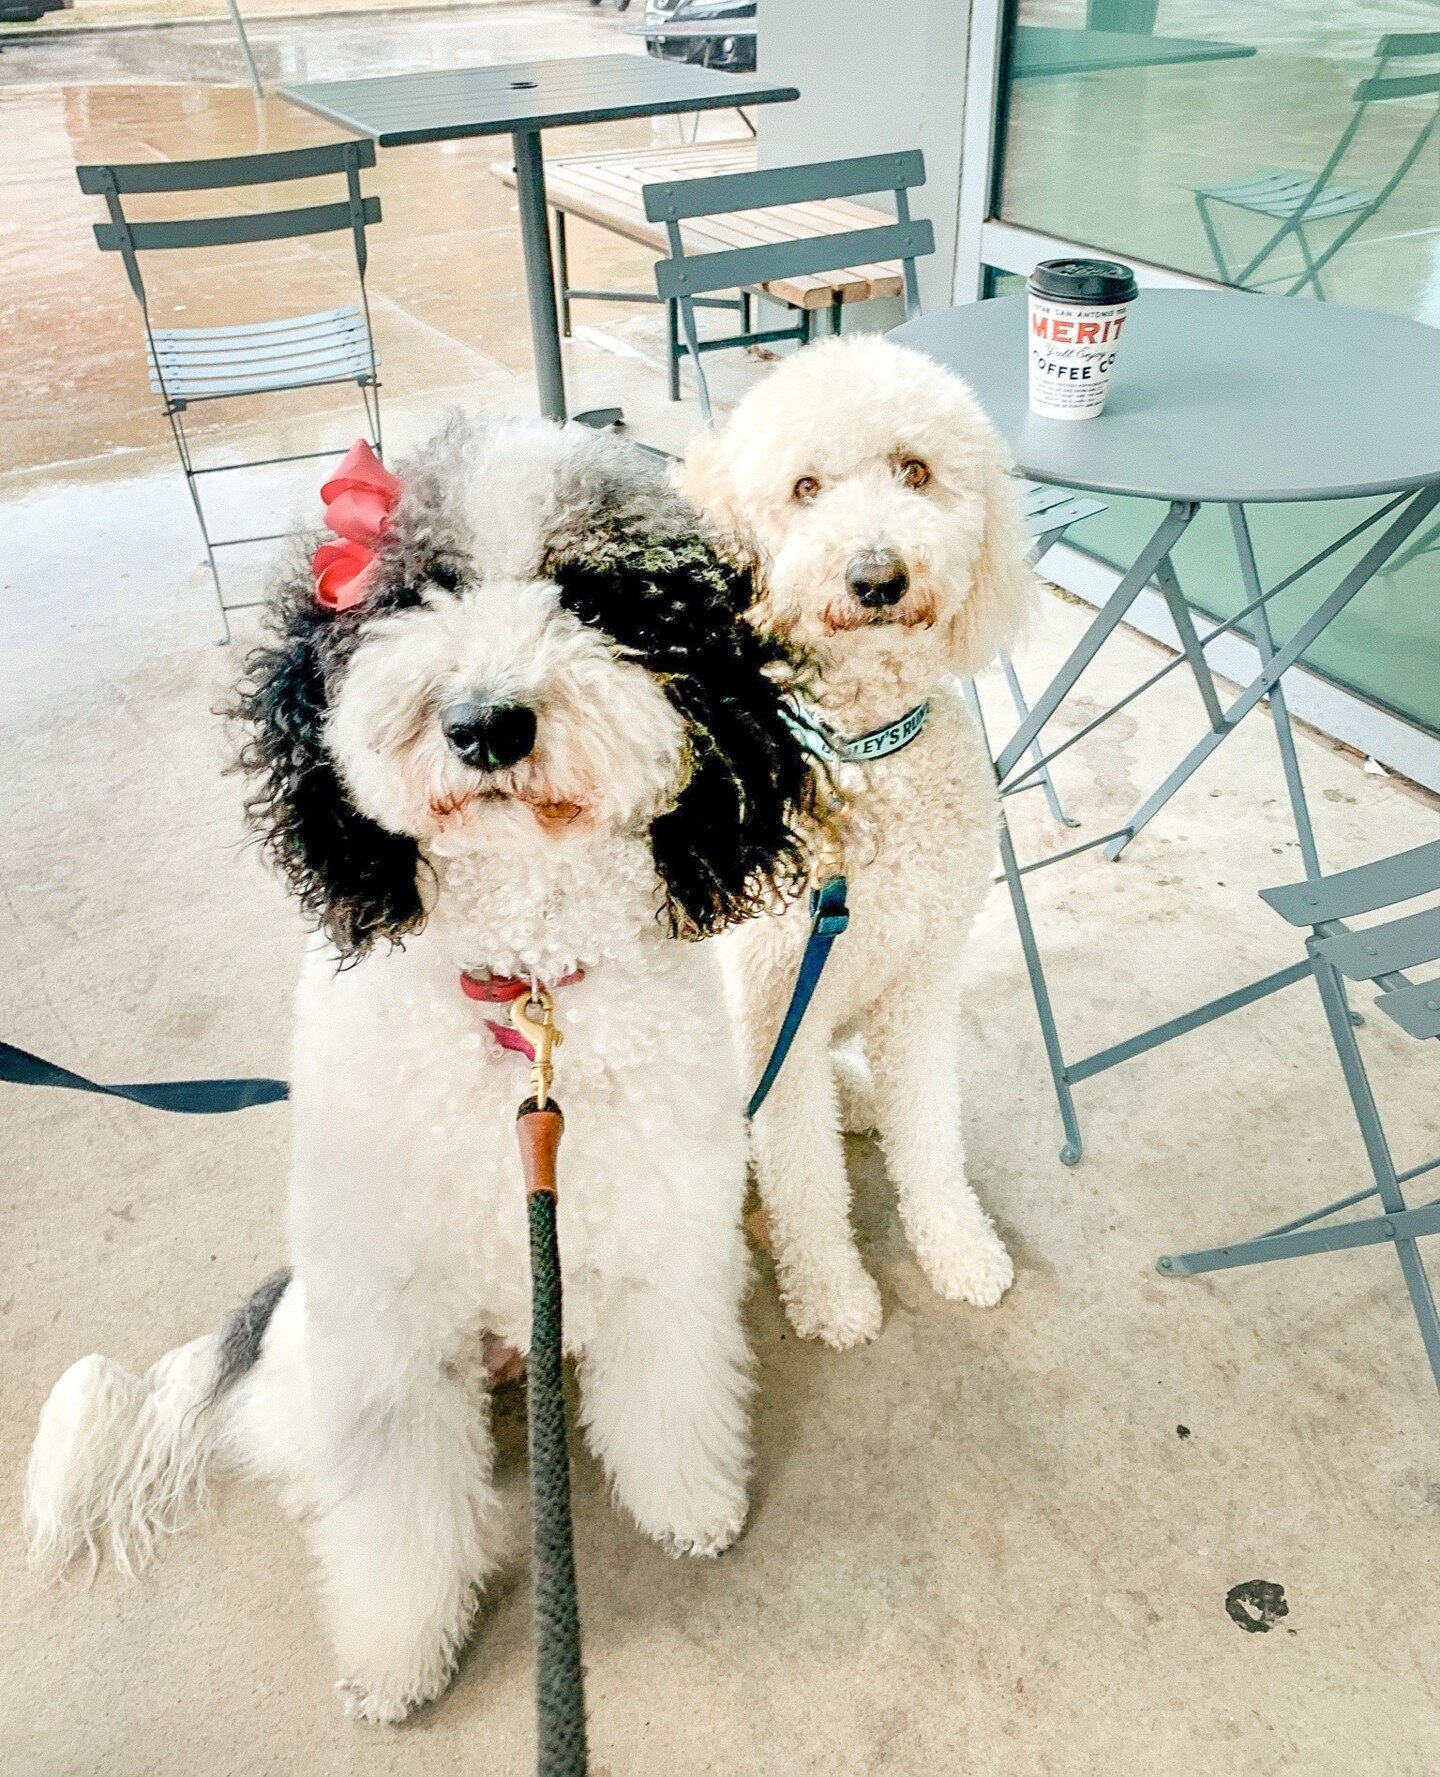 2 pup cups please @meritcoffee! 🐾 ☕️⁠
⁠
⁠
⁠
⁠
#dogsofinstagream #coffee #funnydogs #goldendoodle #monday #mondaymotivation